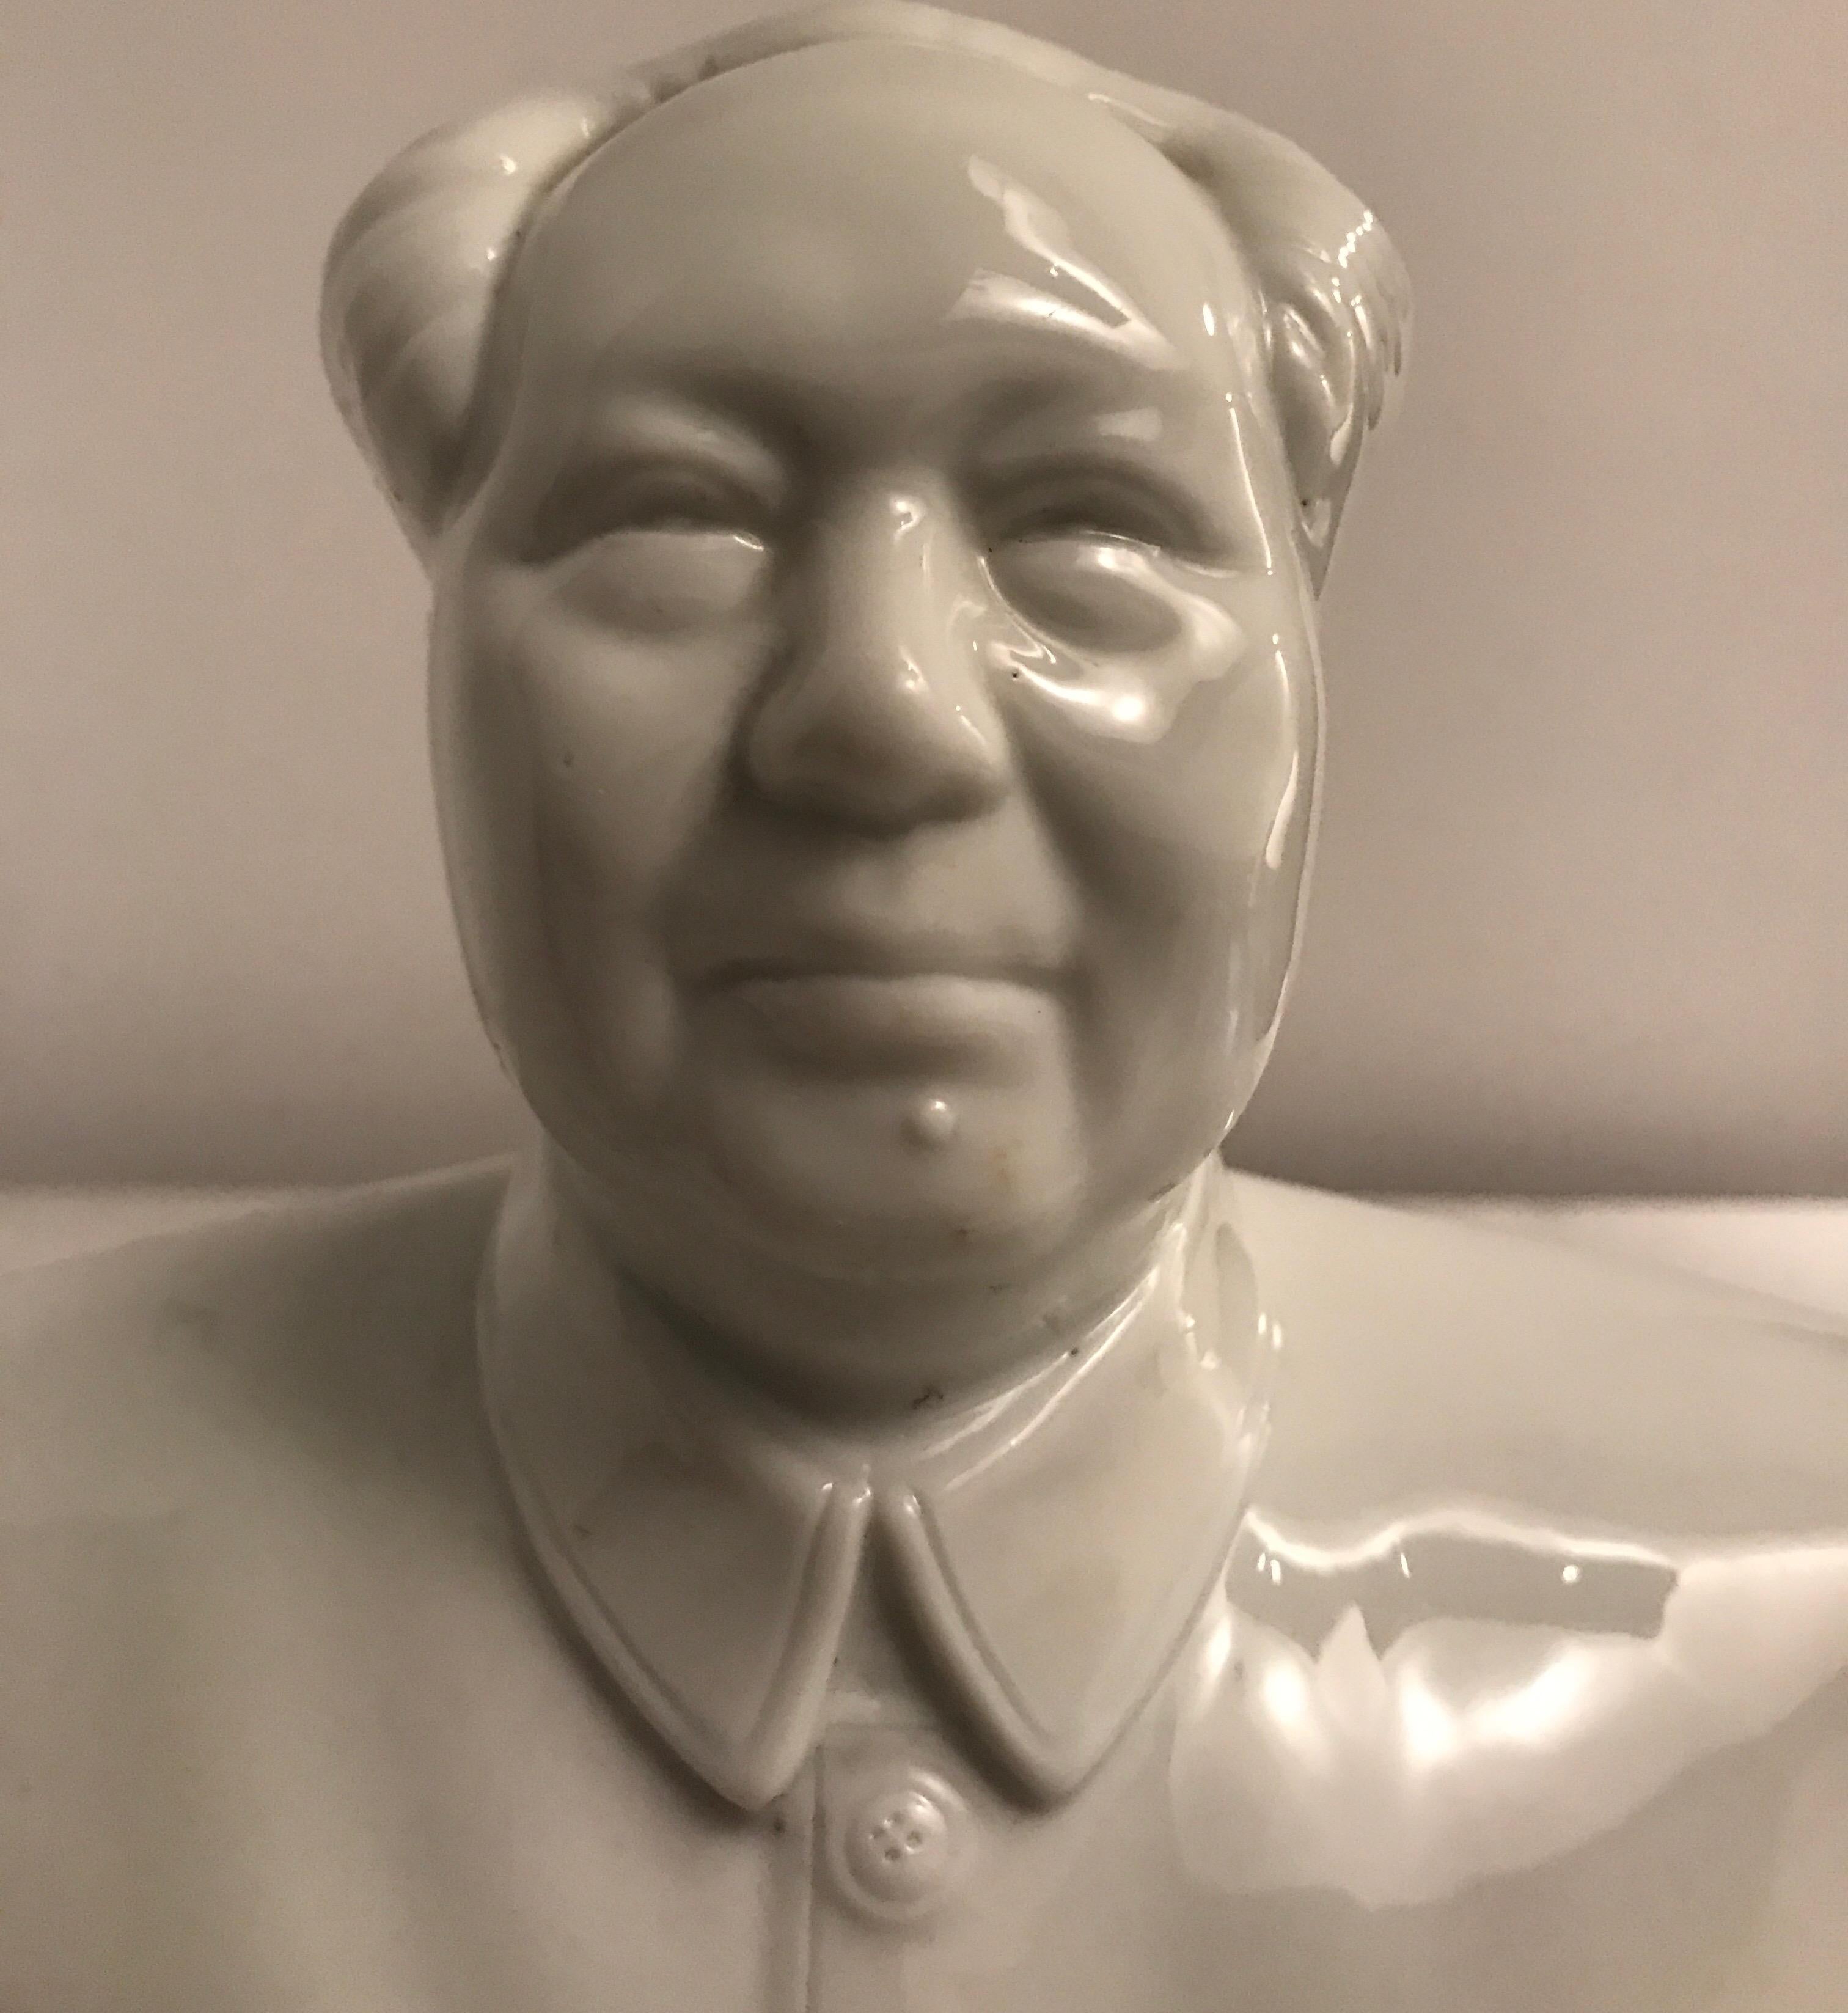 Porcelain cultural revolution bust of Mao Tse Tung.
Fantastic historic political decorative object.